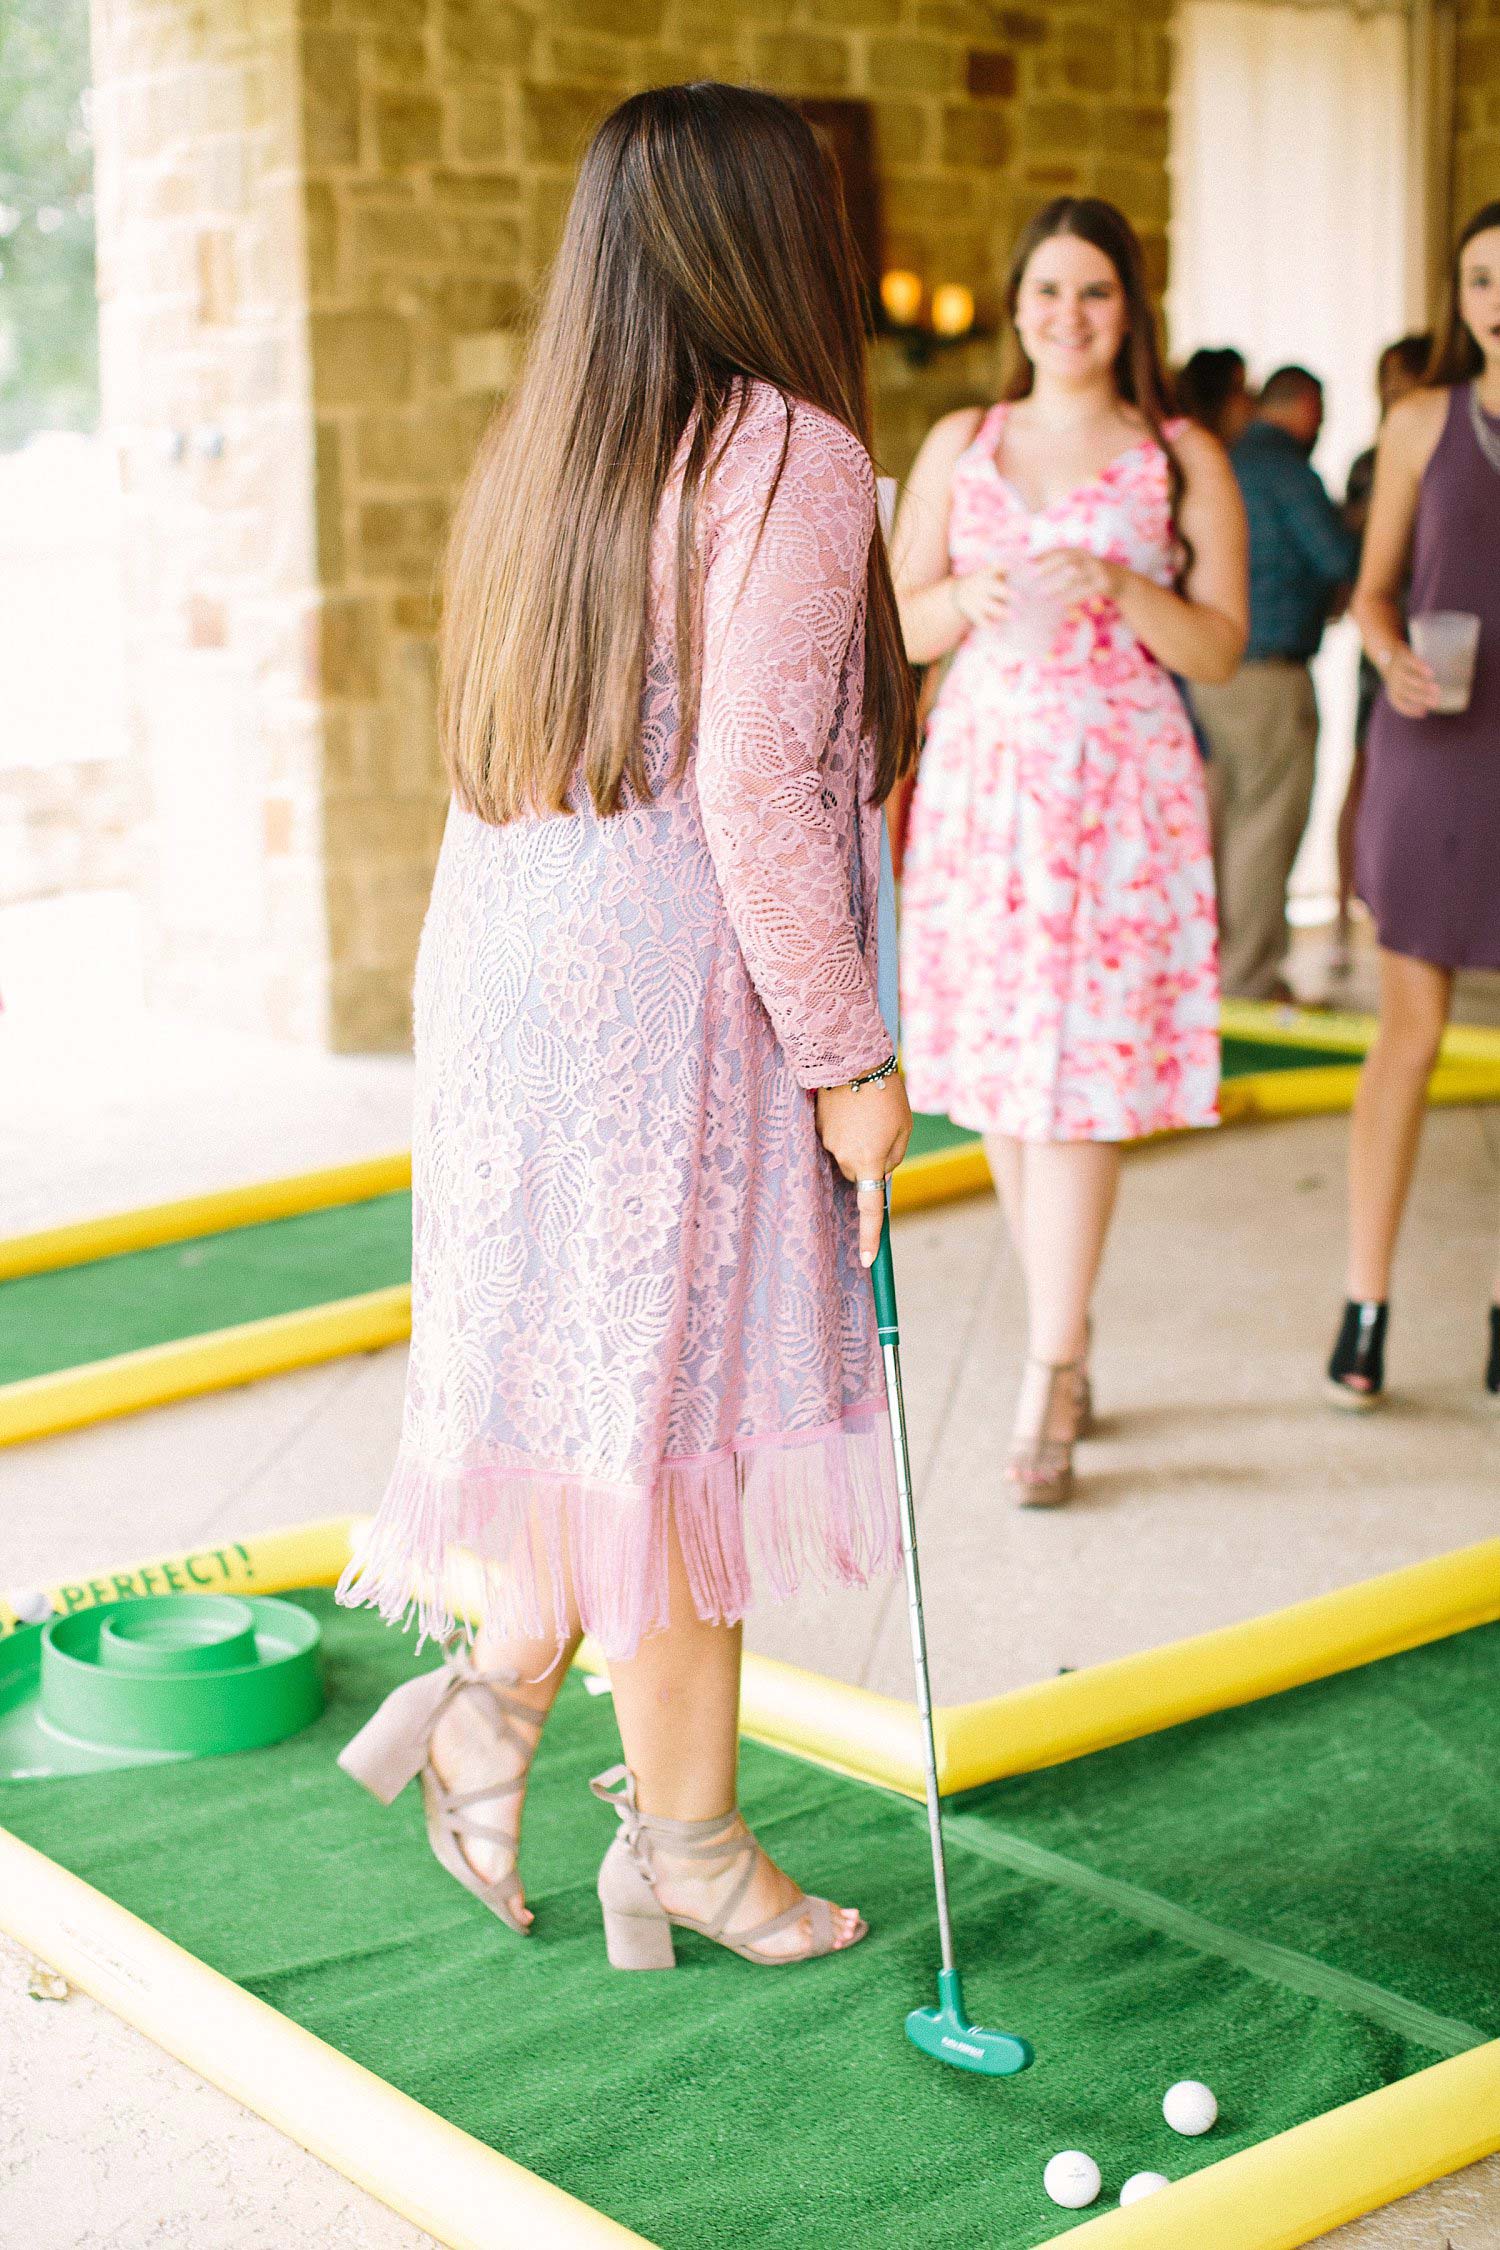 mini golf at a wedding